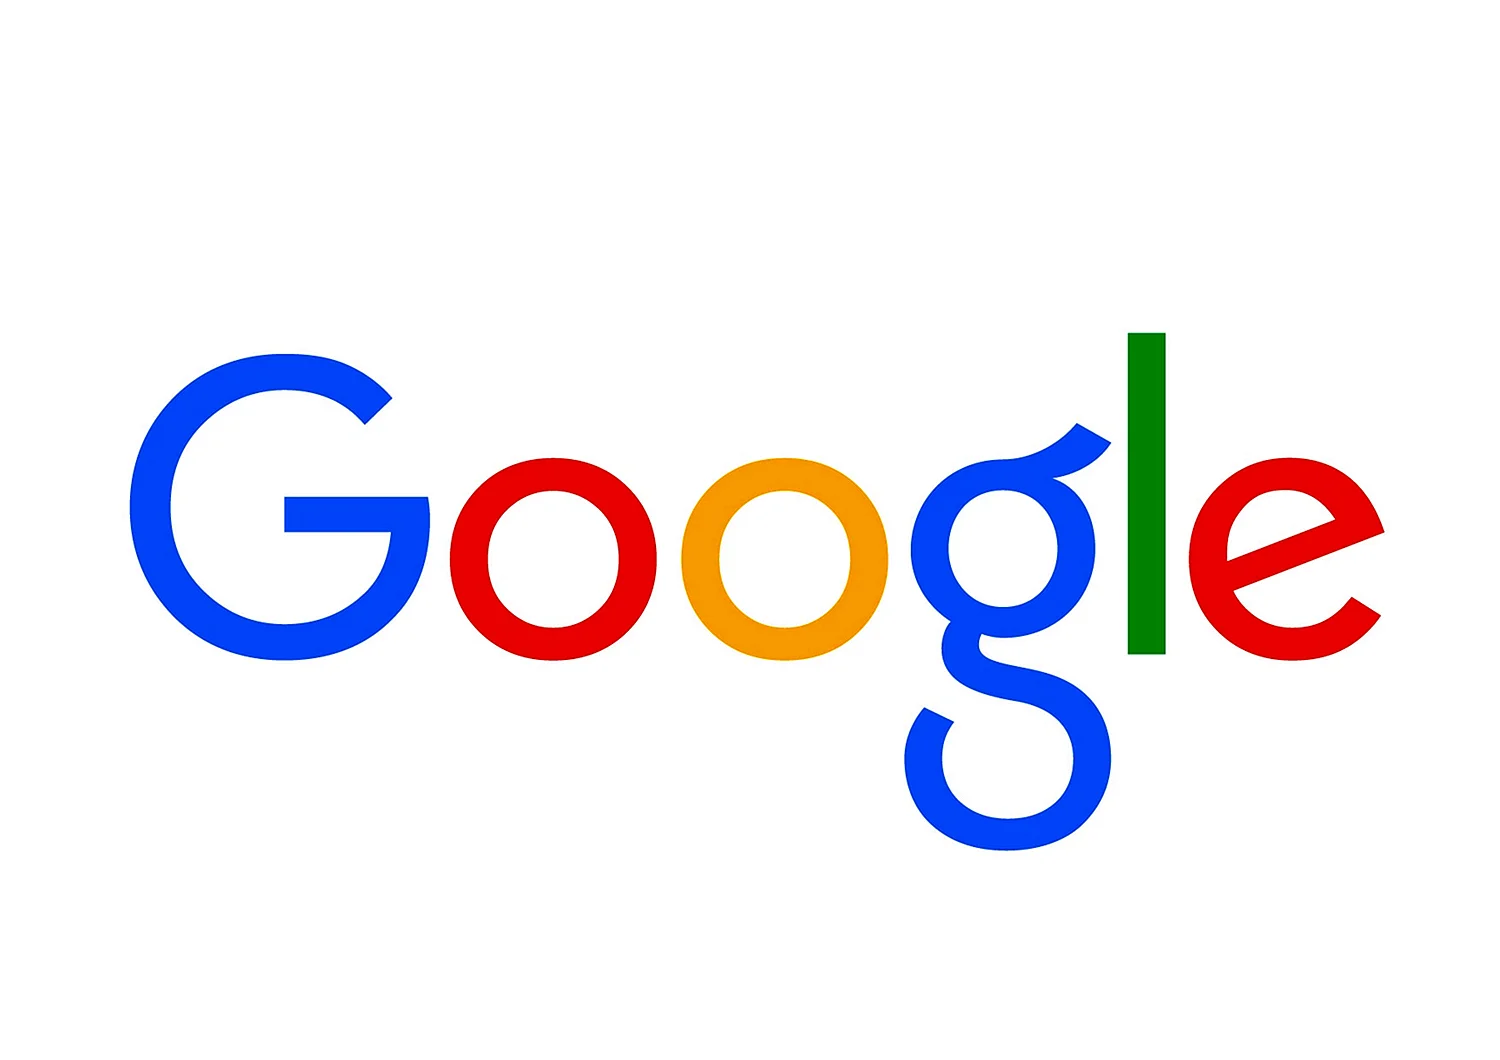 Google логотип